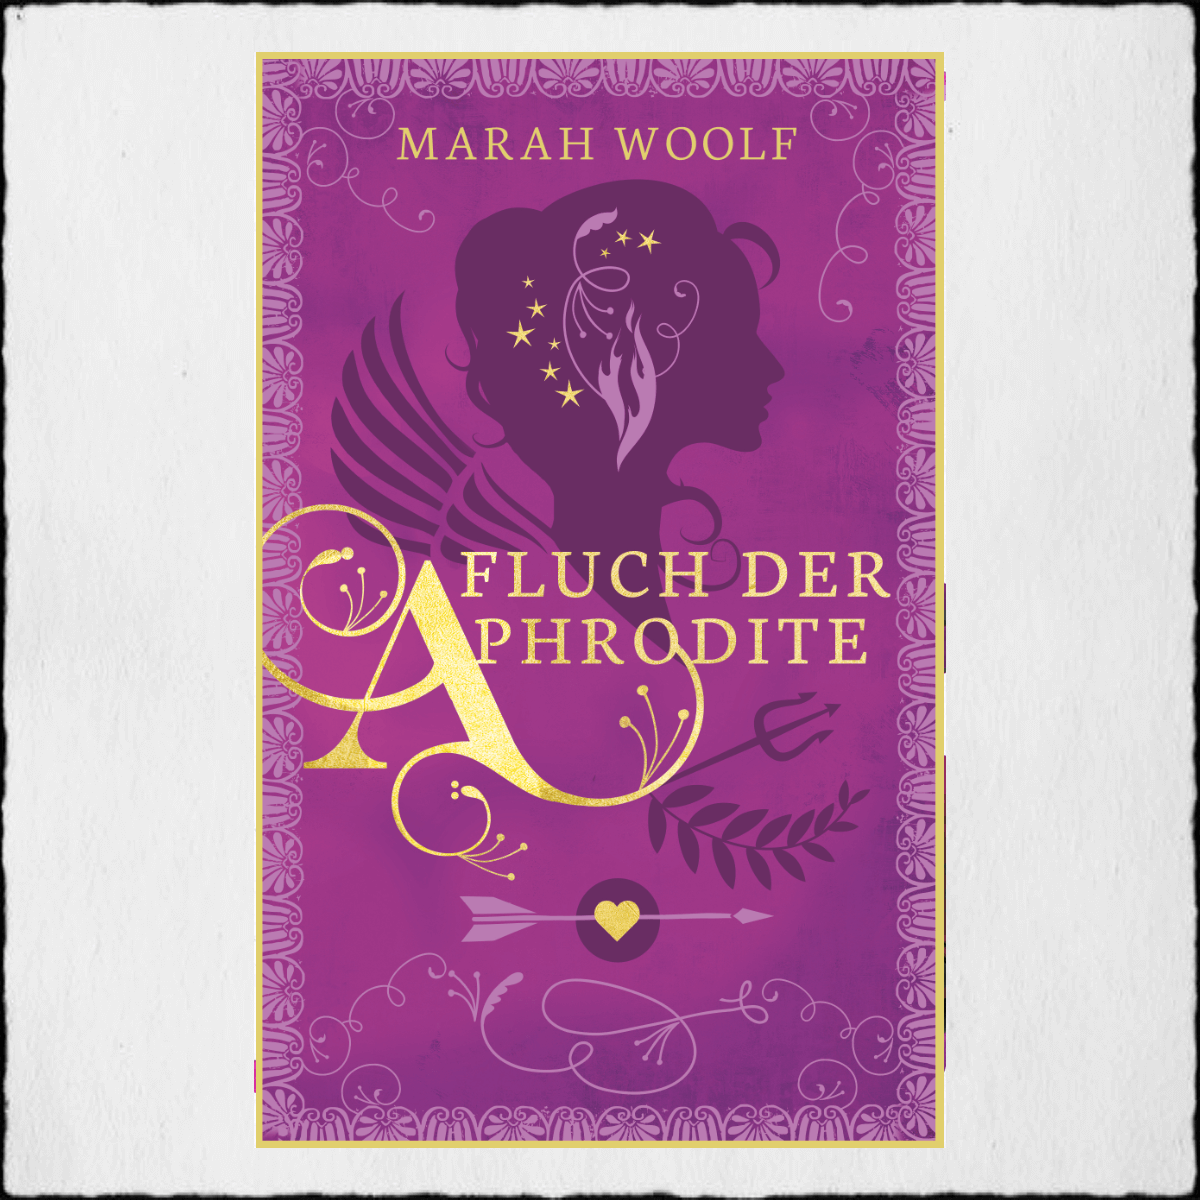 Marah Woolf "Fluch der Aphrodite" © 2020 Marah Woolf in Selbstpublikation